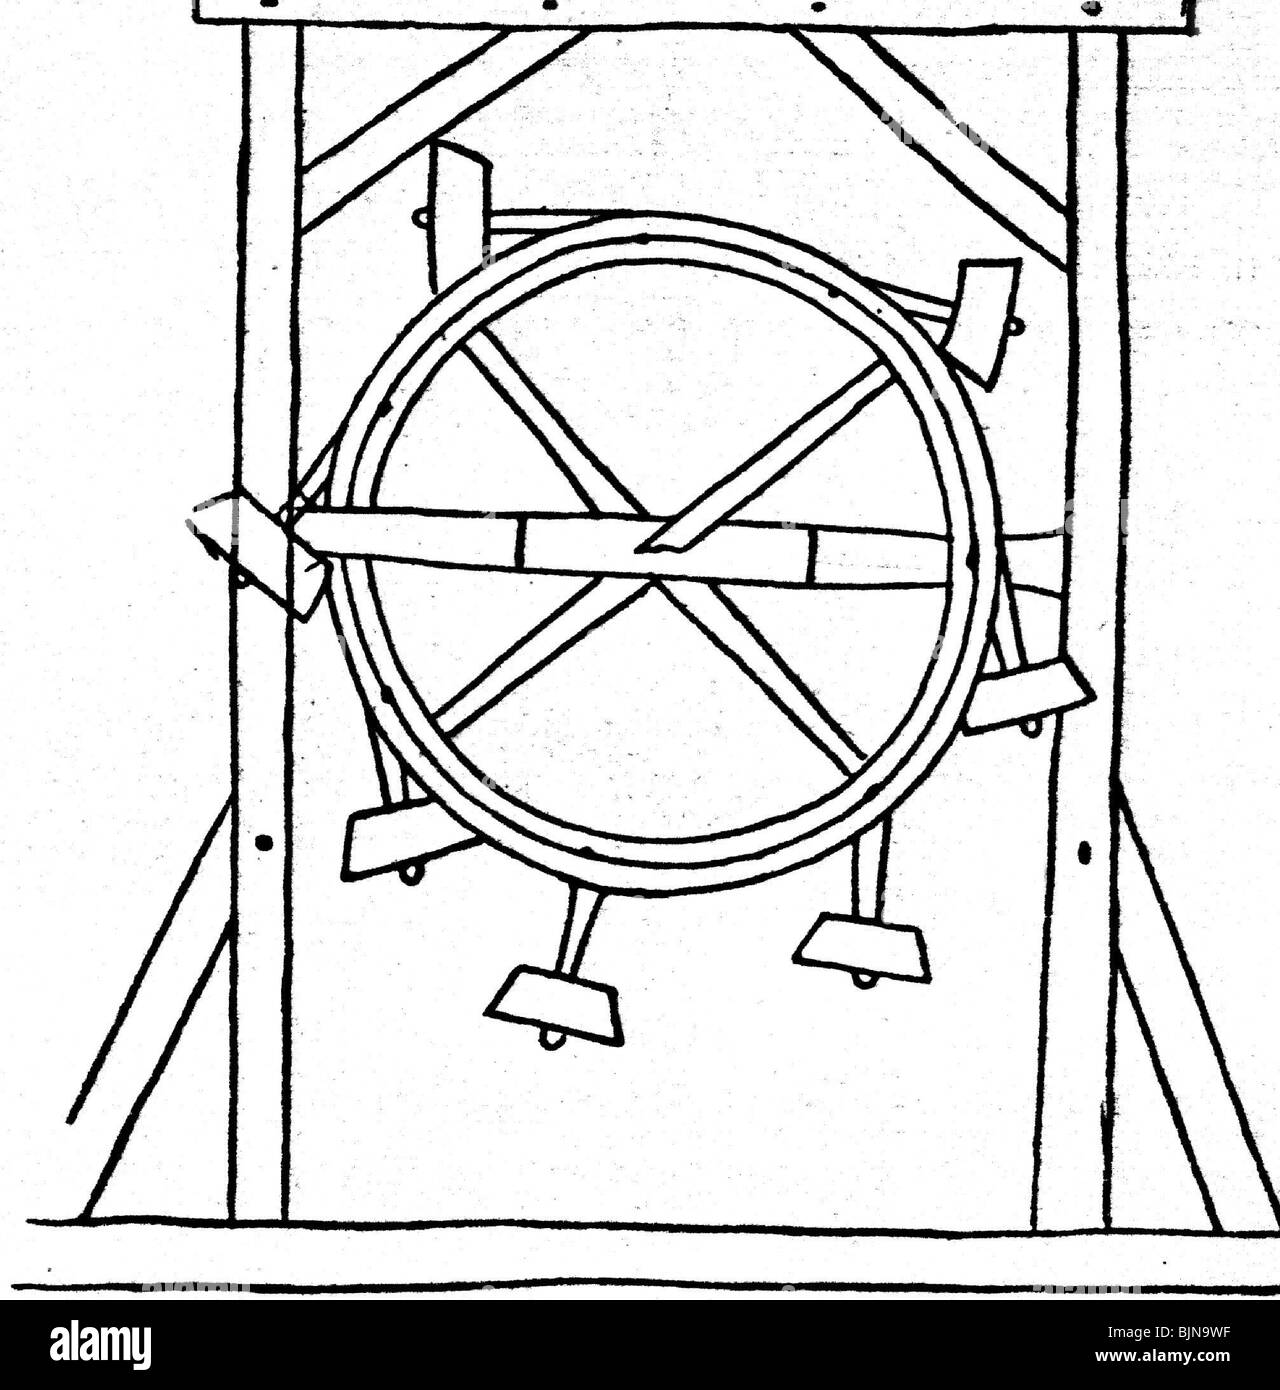 technics, perpetuum mobile, perpetual motion machine by Villard de Honnecourt, circa 1230, Stock Photo